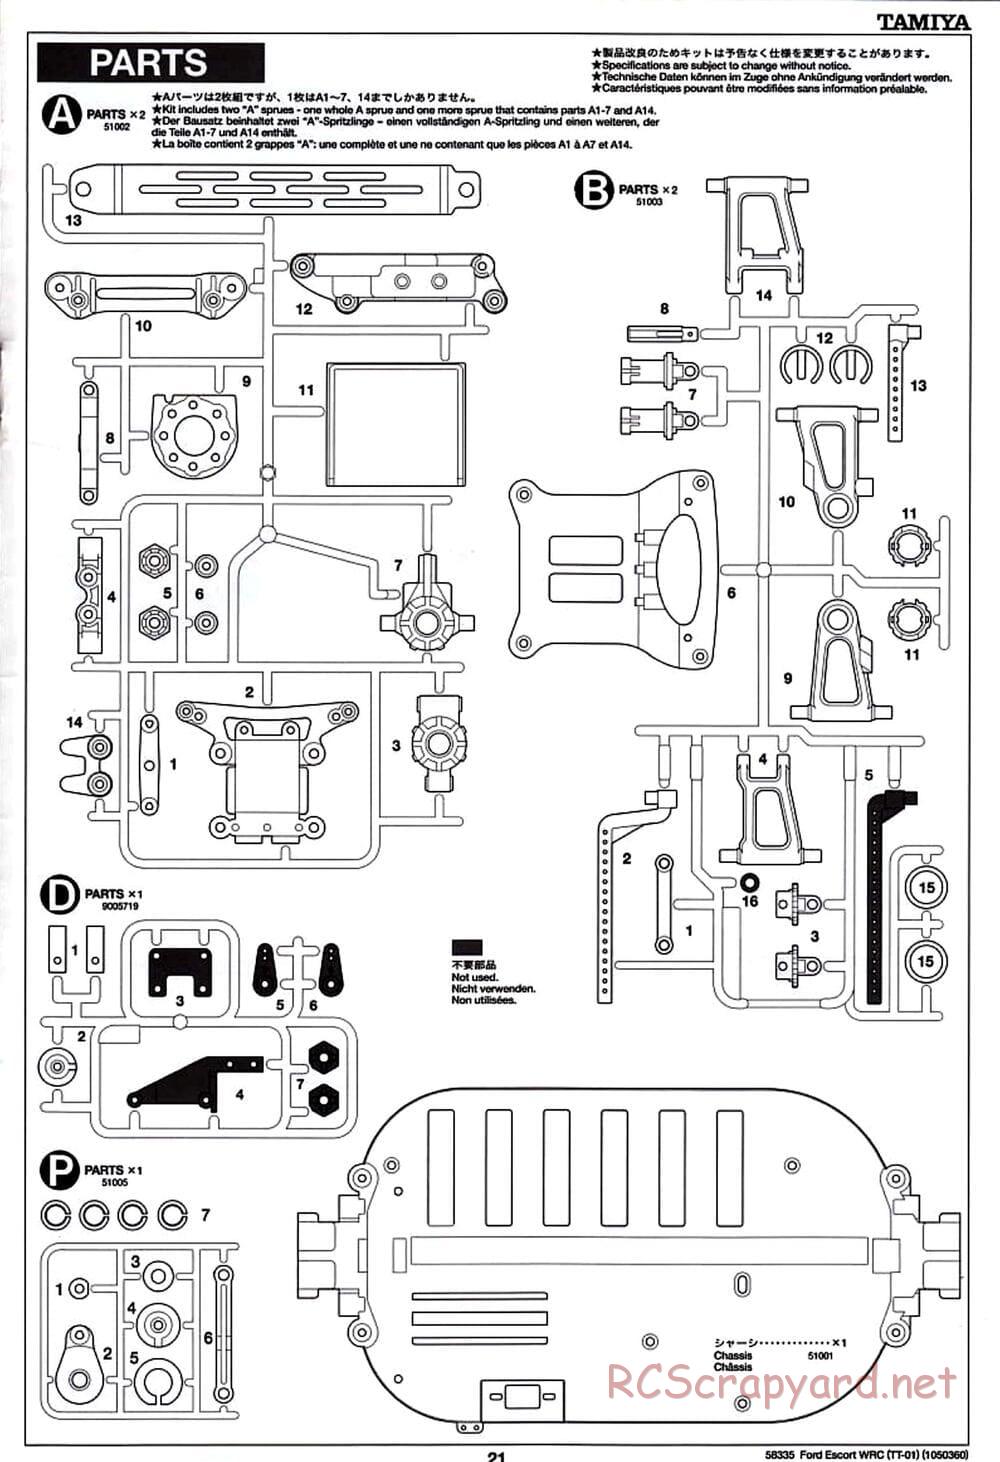 Tamiya - Ford Escort WRC - TT-01 Chassis - Manual - Page 21